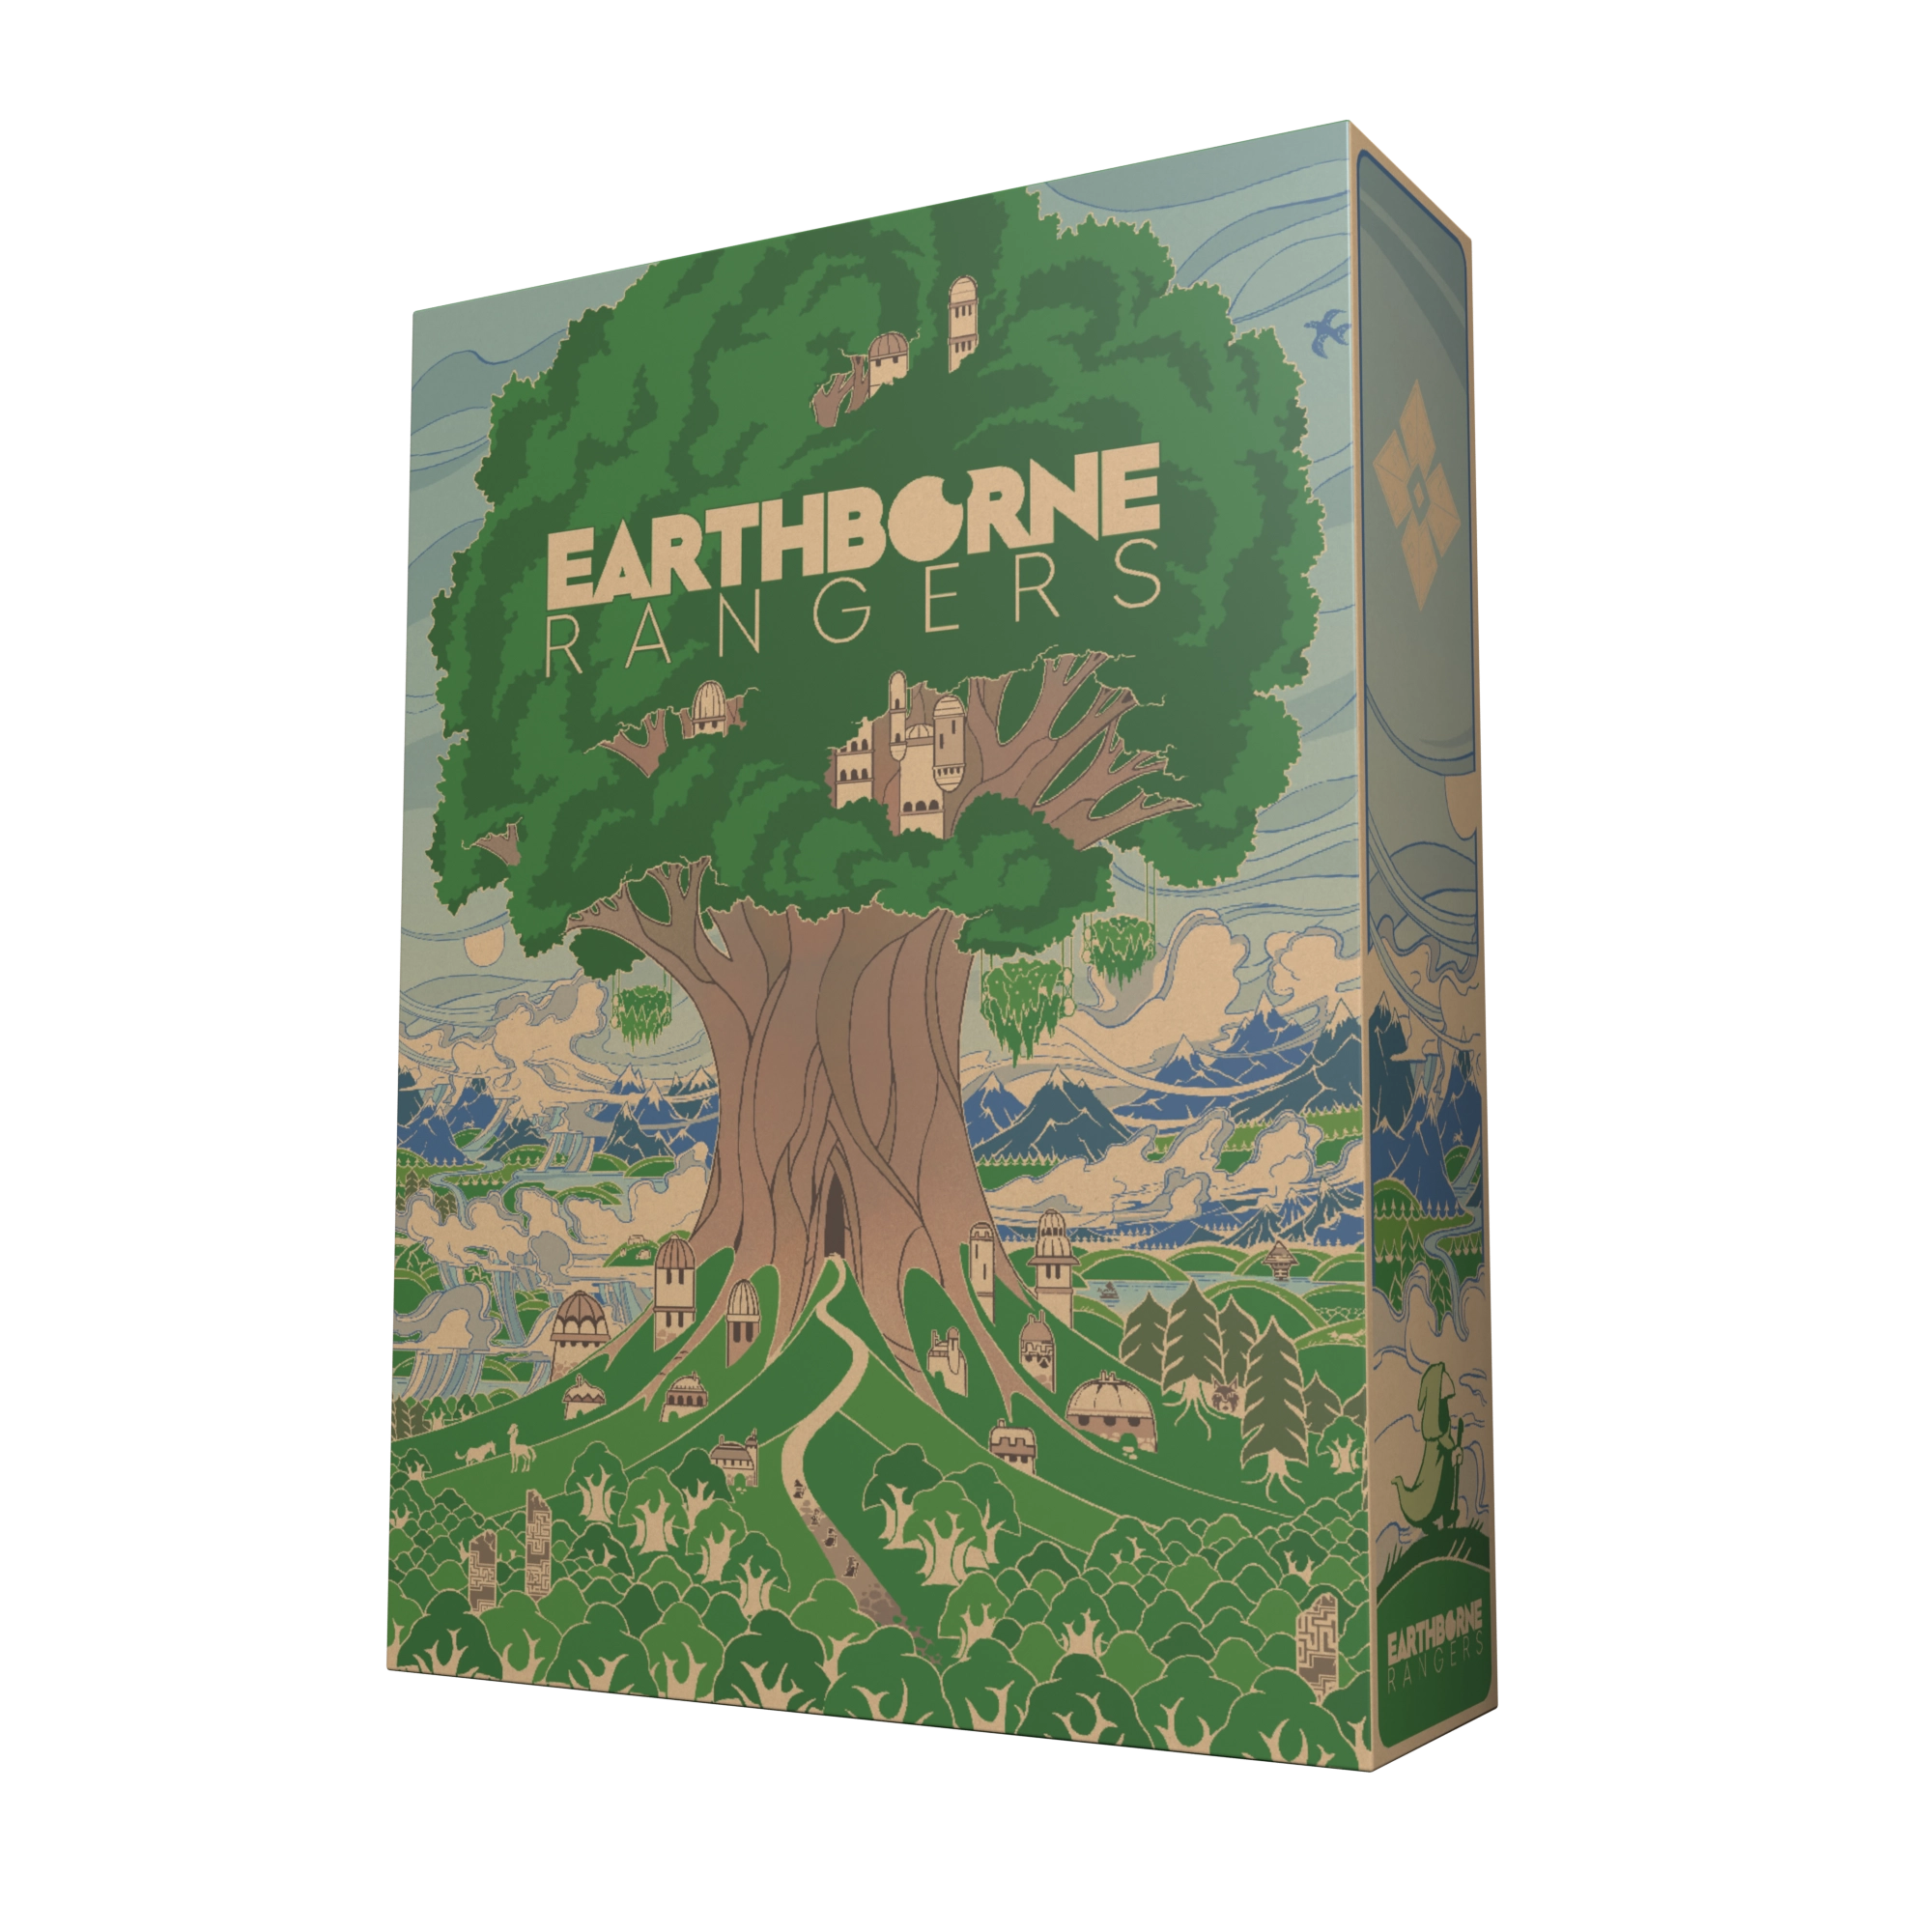 Earthborne Rangers (First Printing)